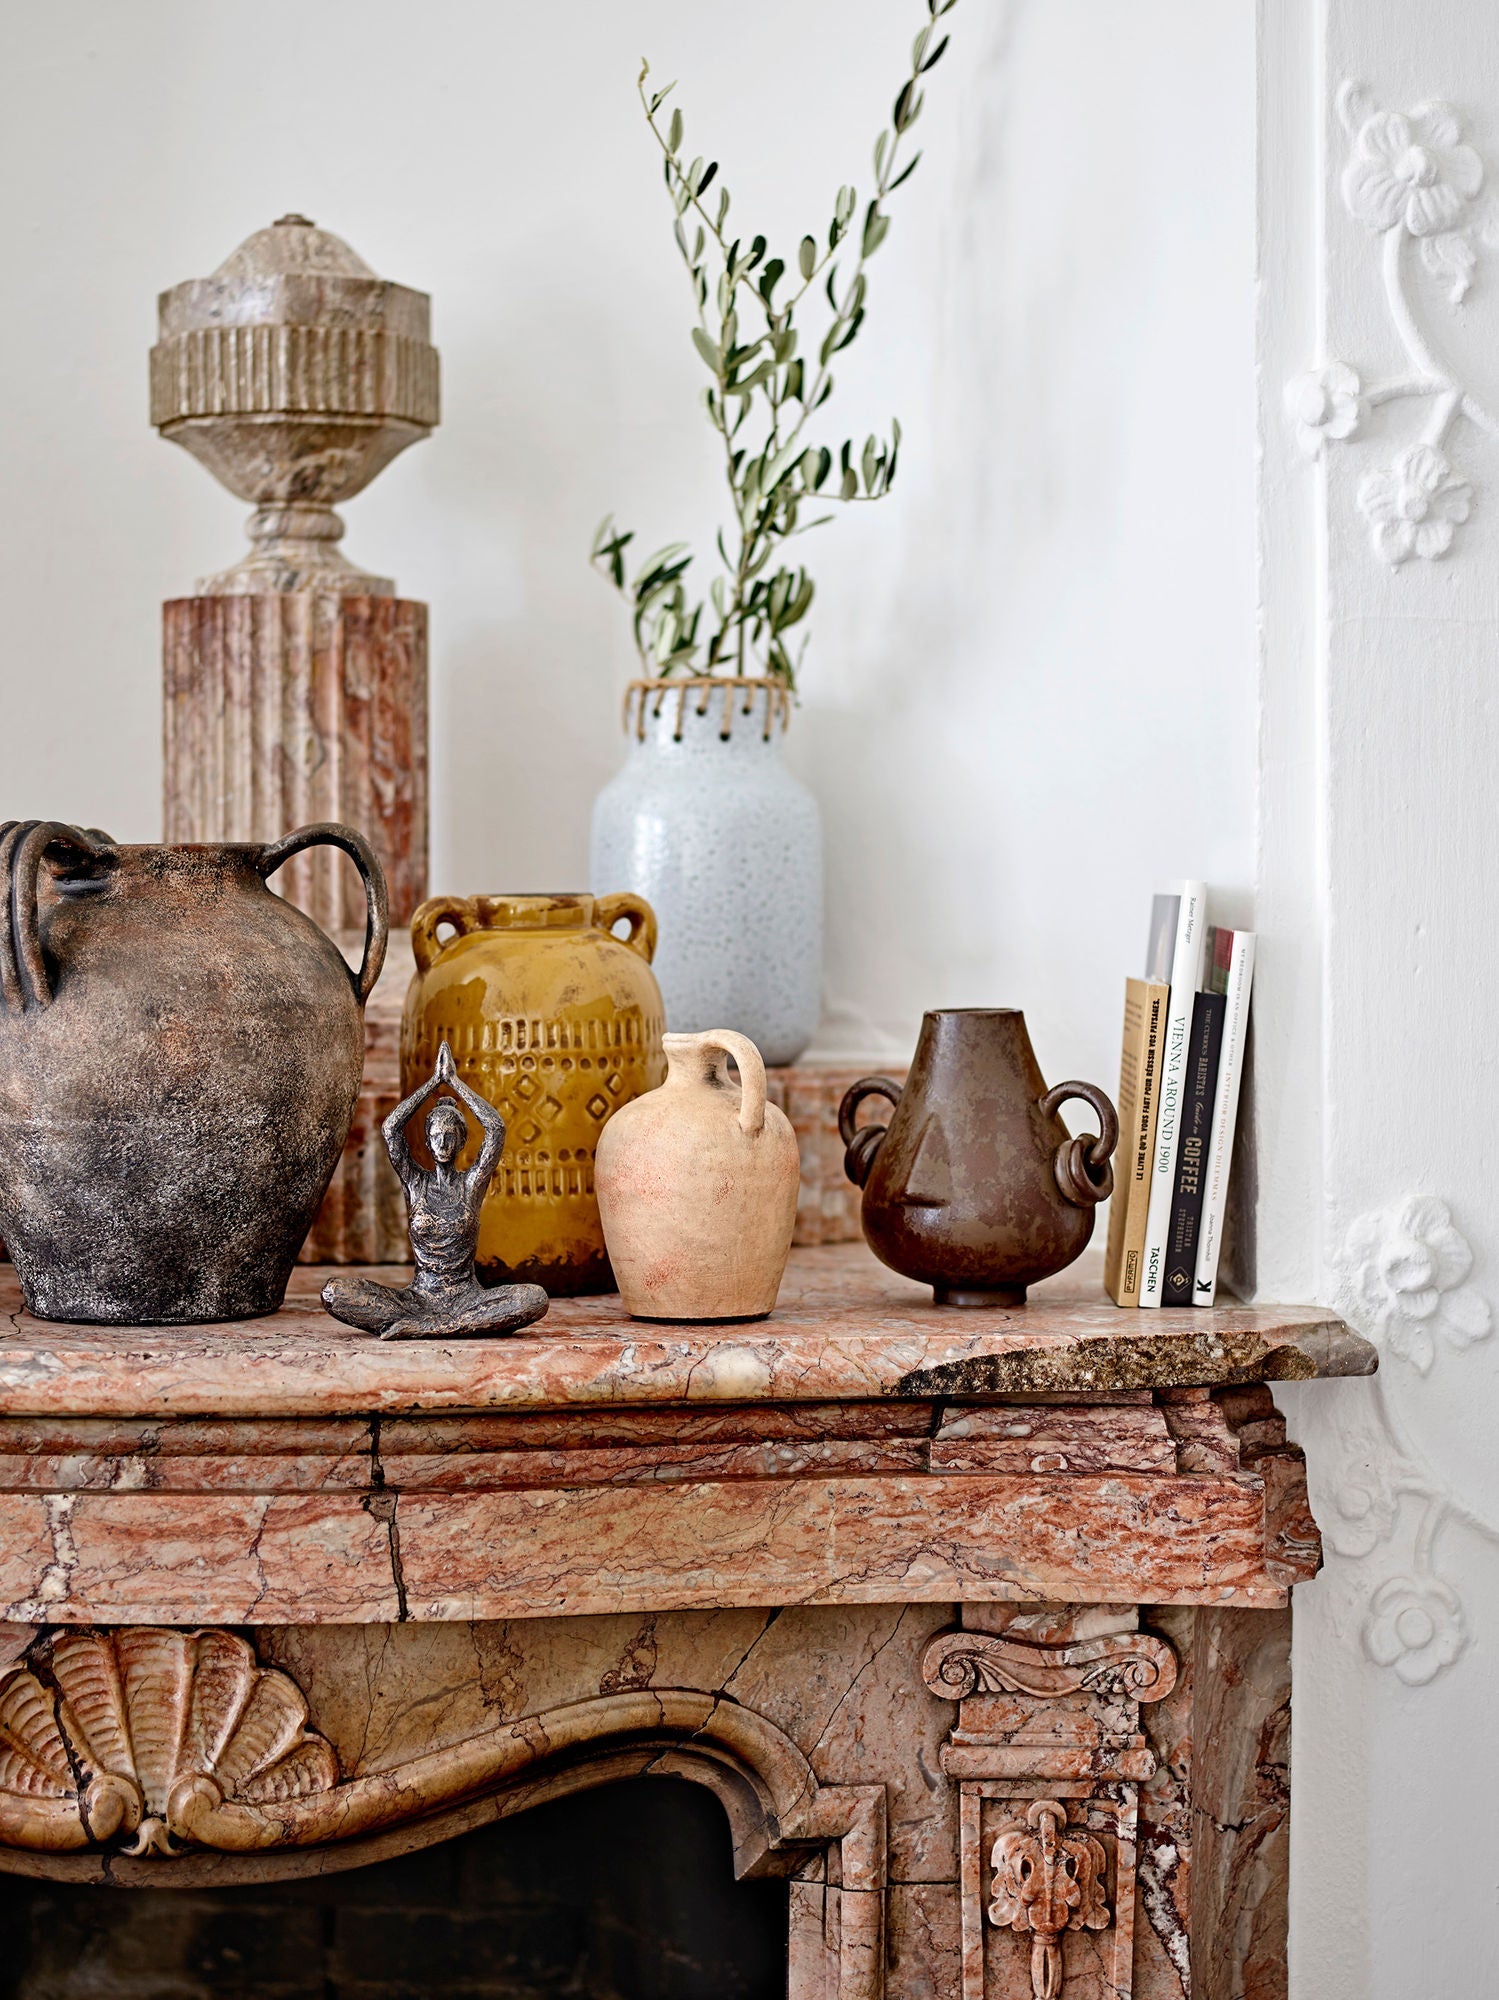 Bloomingville Janel Vase, Grey, Ceramic